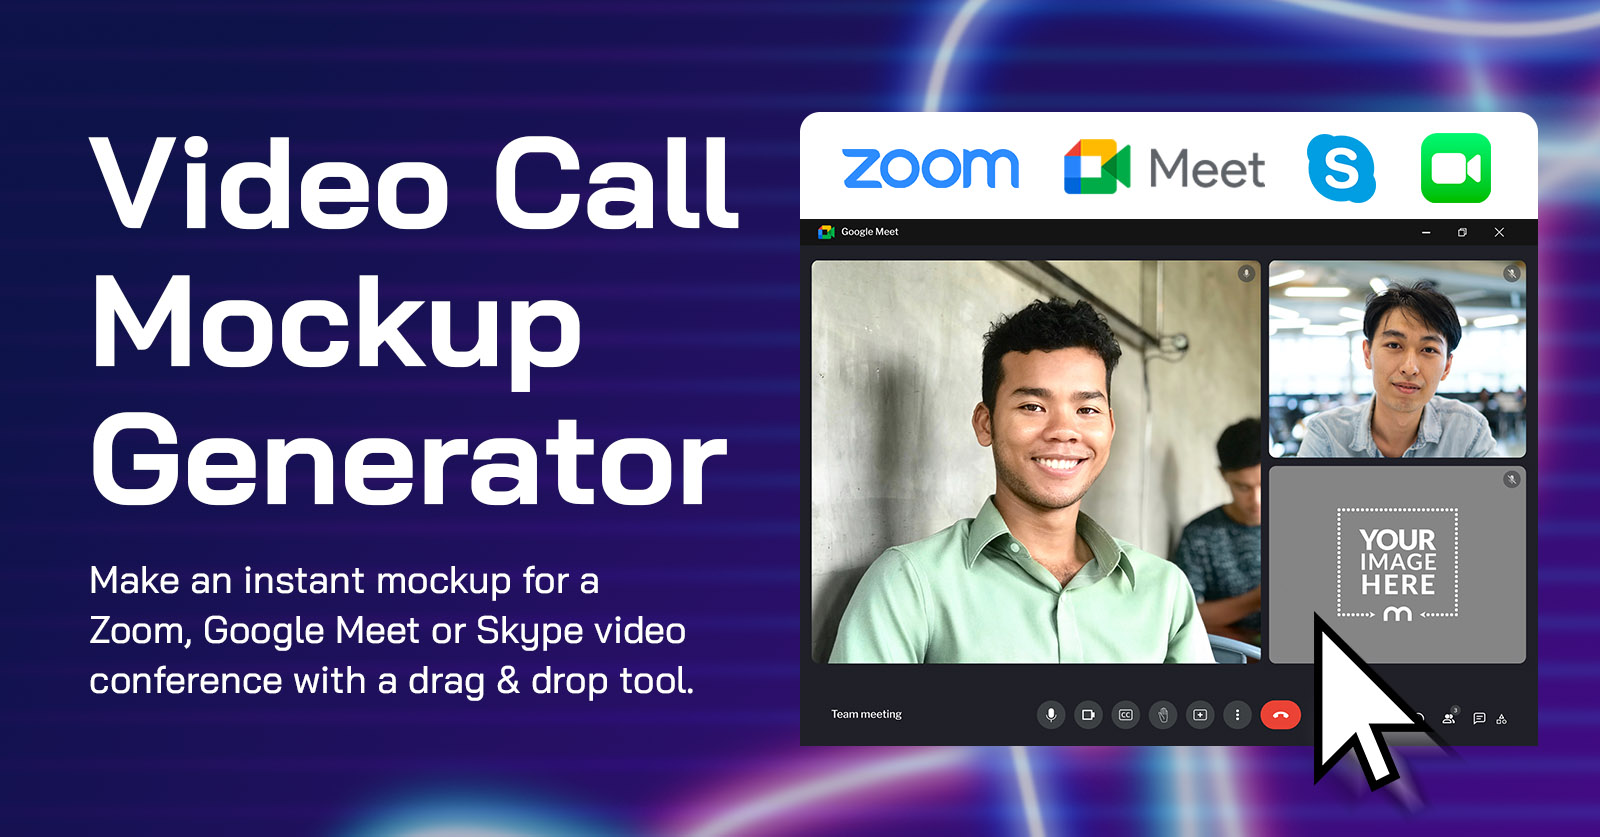 Video-meeting-zoom-call-mockup-generator